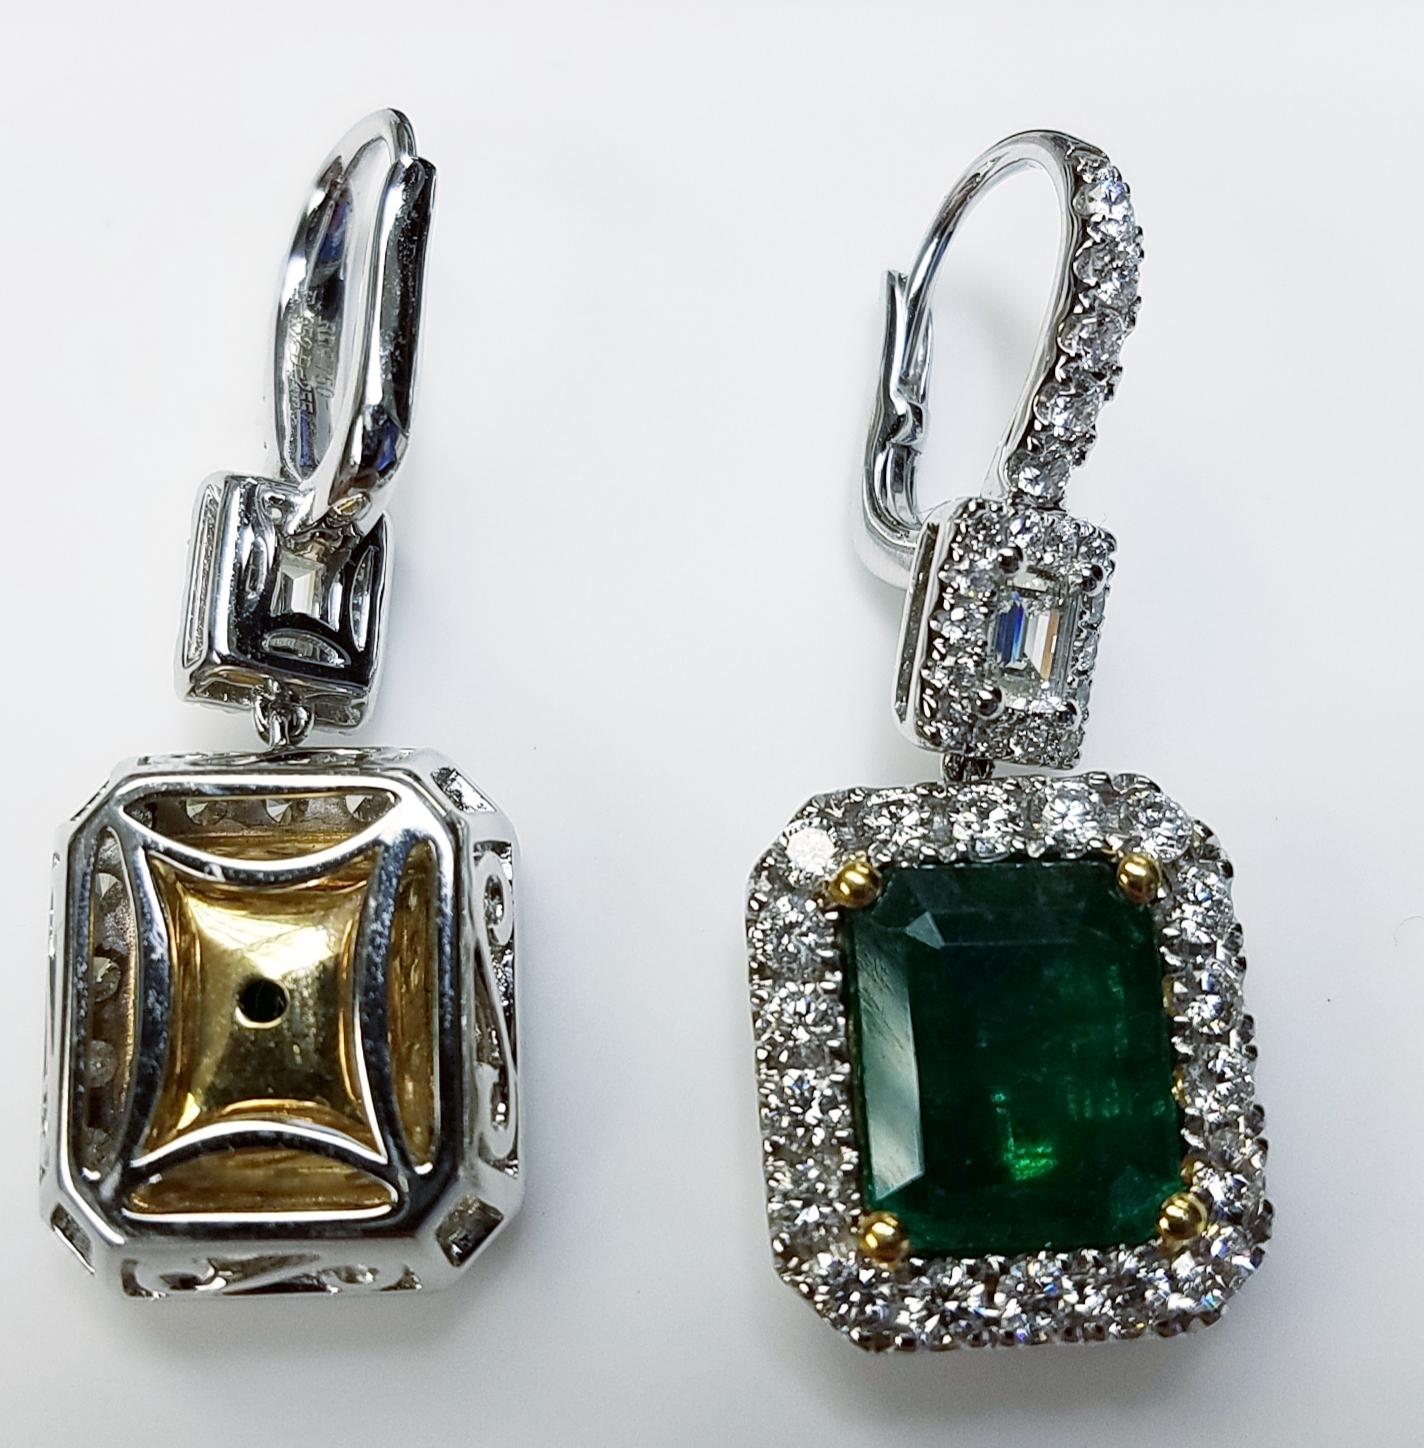 GIA Certified 18 Karat White Gold Emerald Cut Emerald and Diamond Earrings
9.52 Carats of Emeralds
2.54 Carats of Diamonds
Emerald Cut
18 Karat White Gold 
GIA Certified
